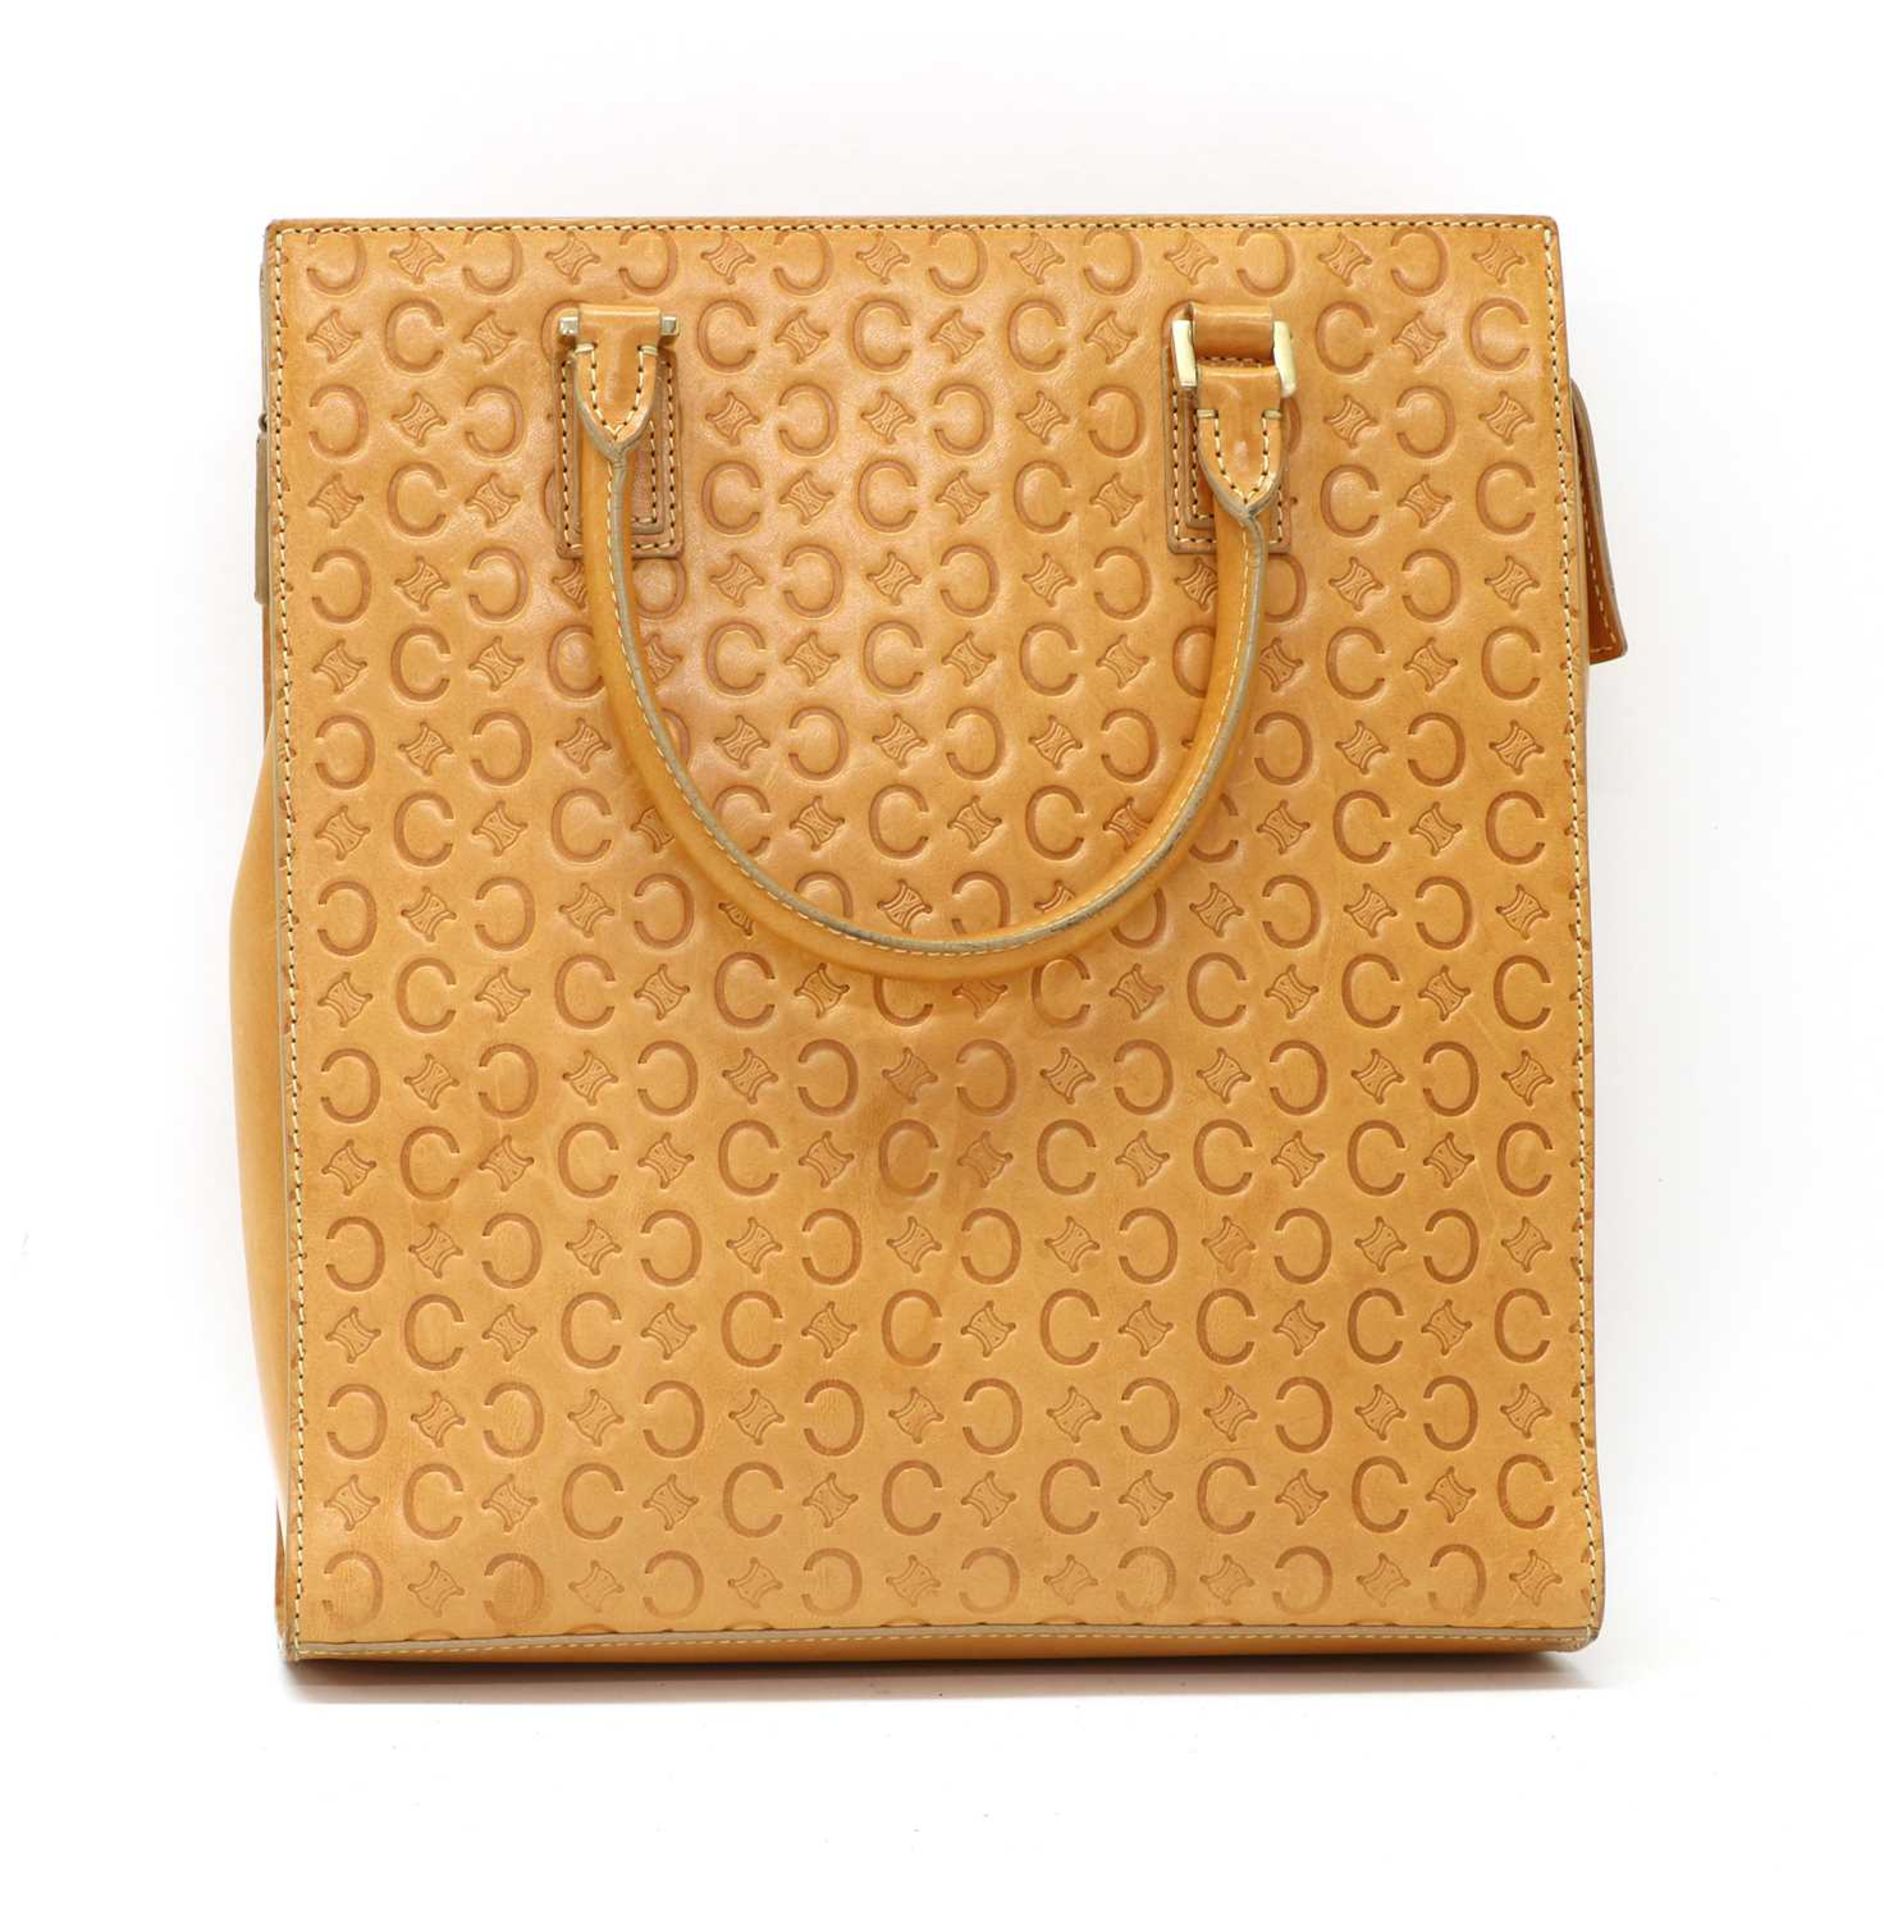 A Celine tan leather blason pattern handbag,